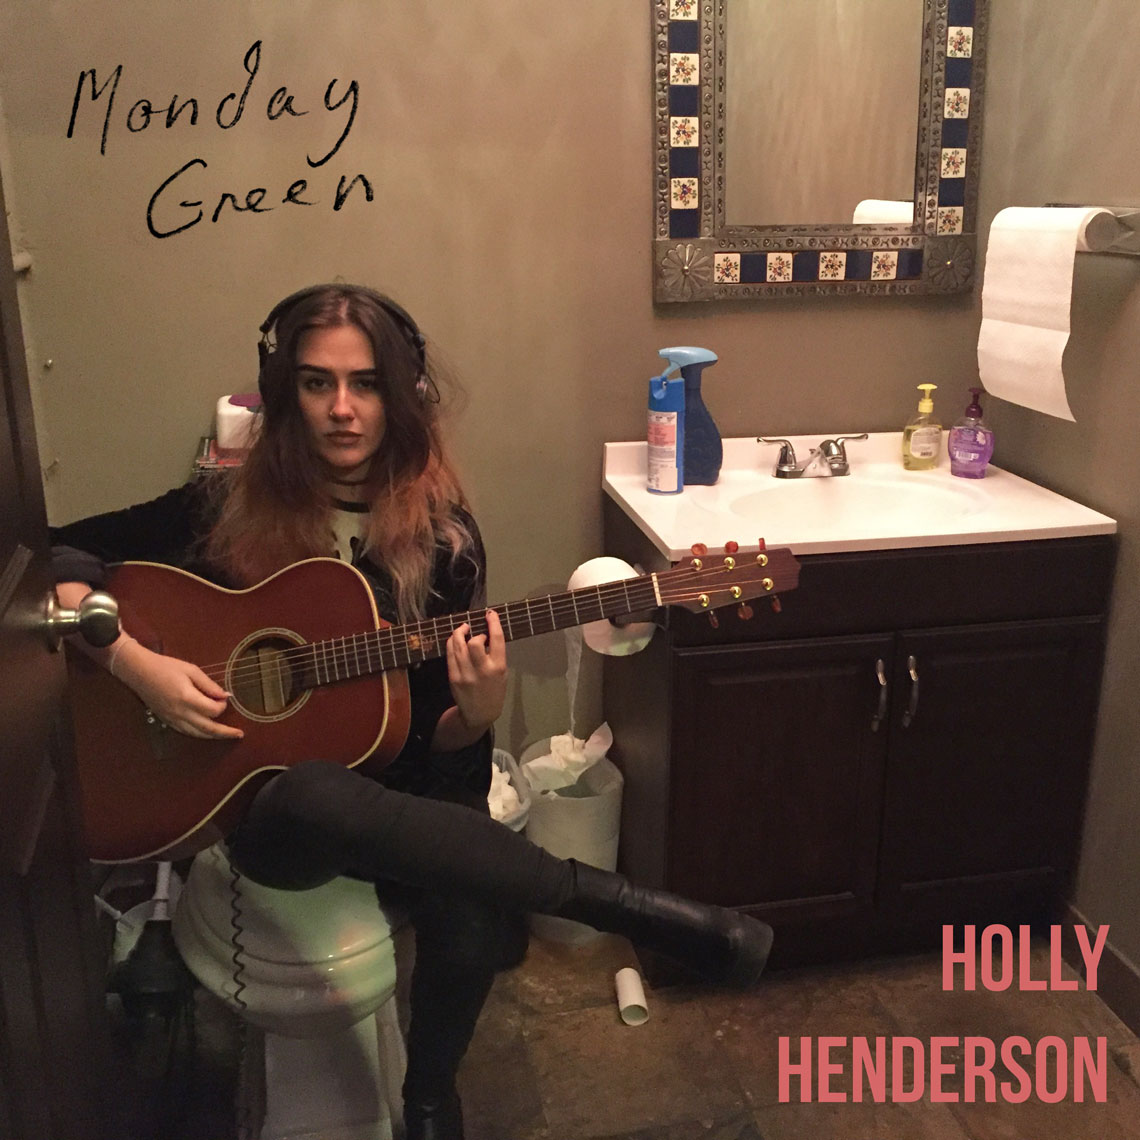 Holly Henderson - "Monday Green"